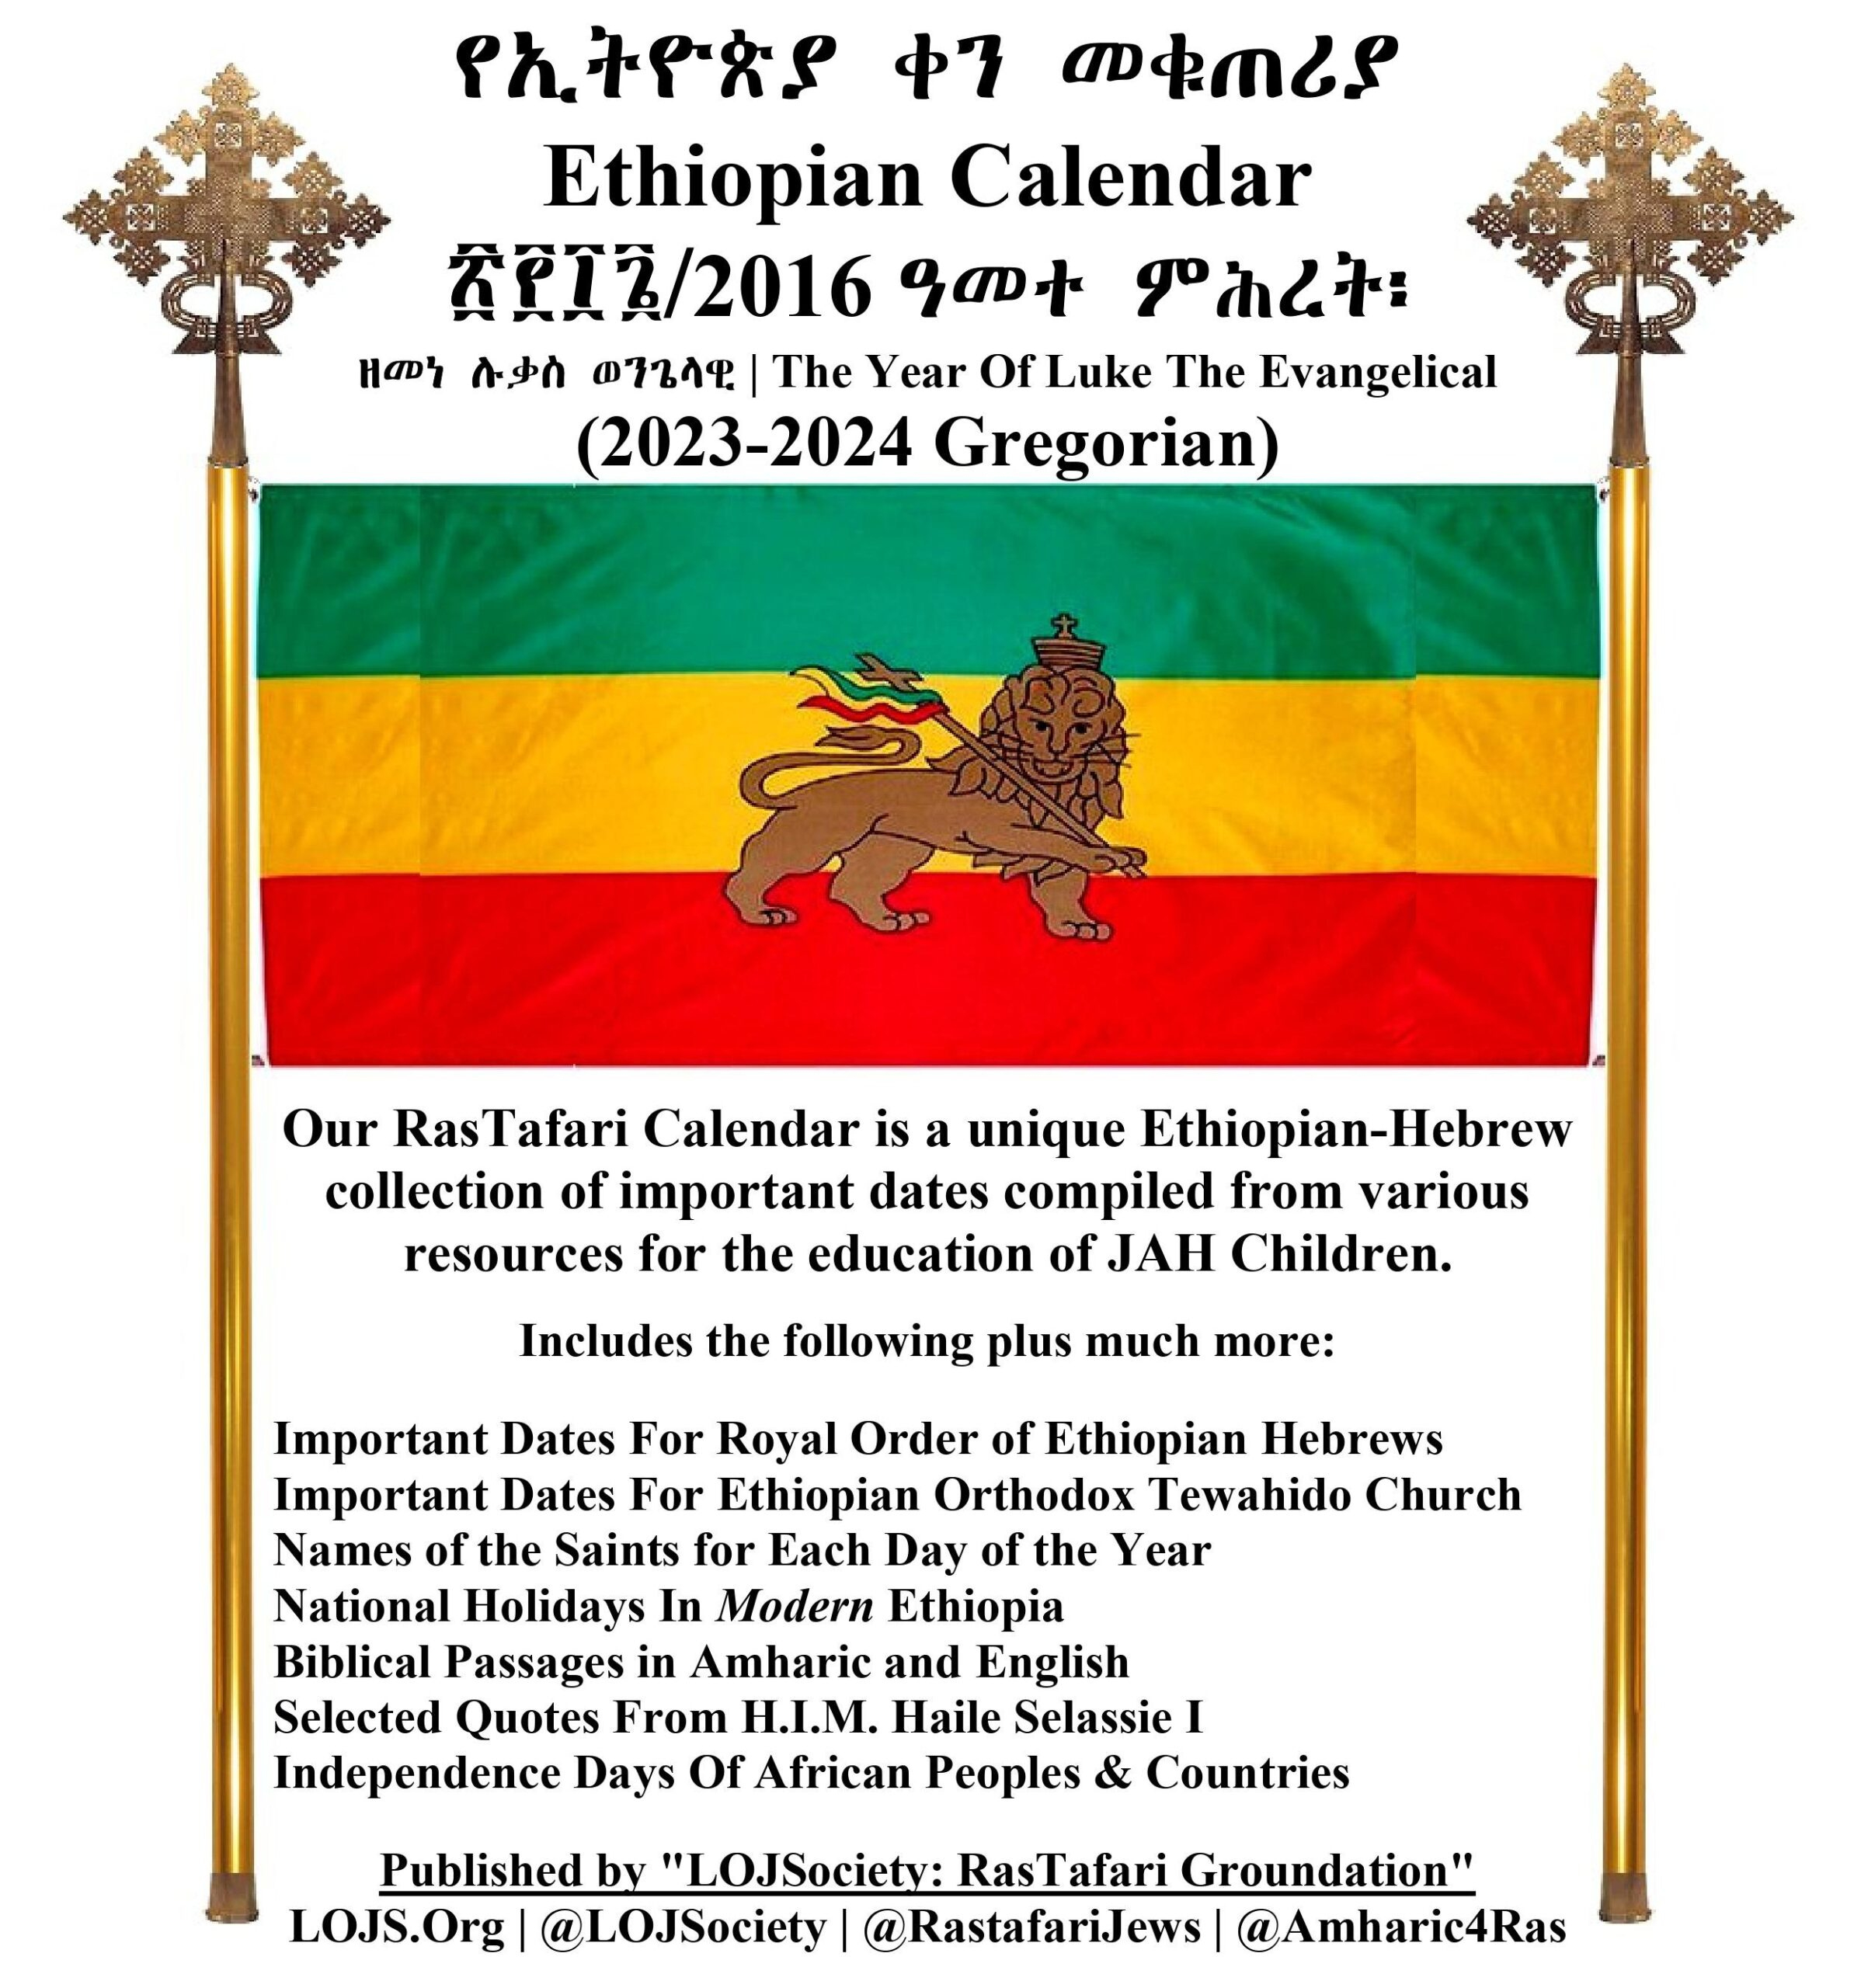 Ethiopian Calendar 2016 - Rastafari Groundation Compilation 2023 | July 23 2024 In Ethiopian Calendar